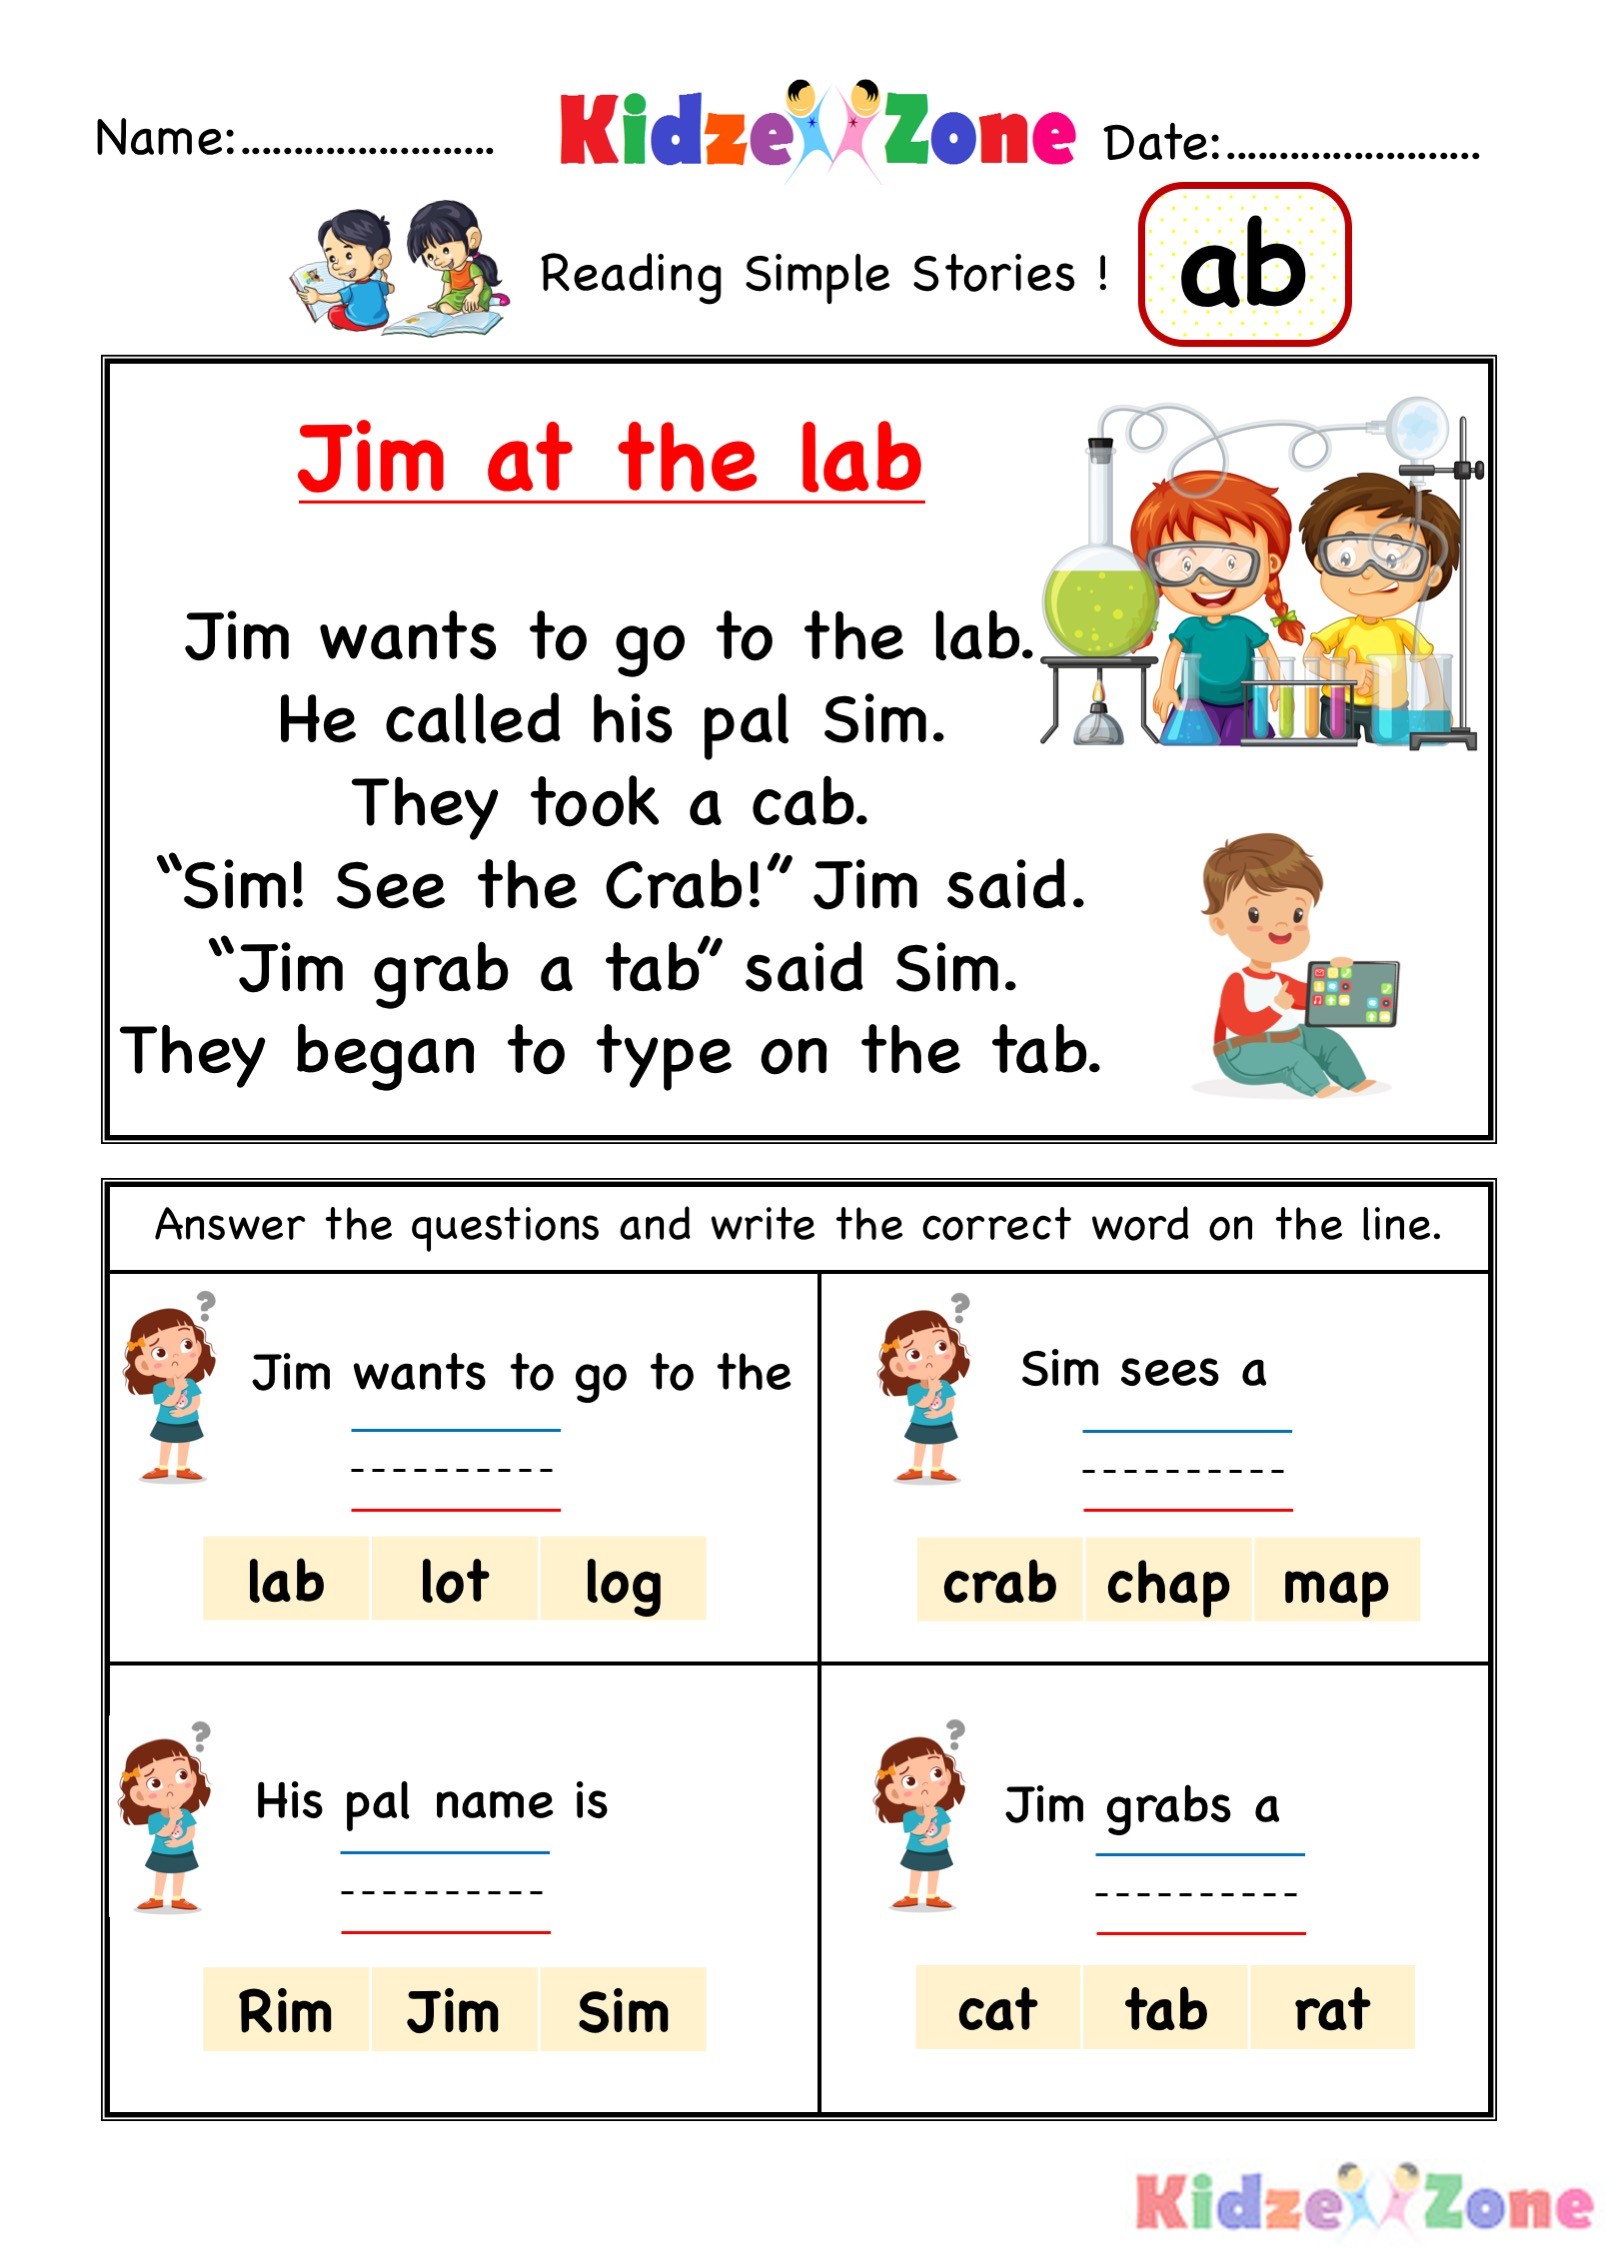 Kindergarten comprehension worksheets for all word families